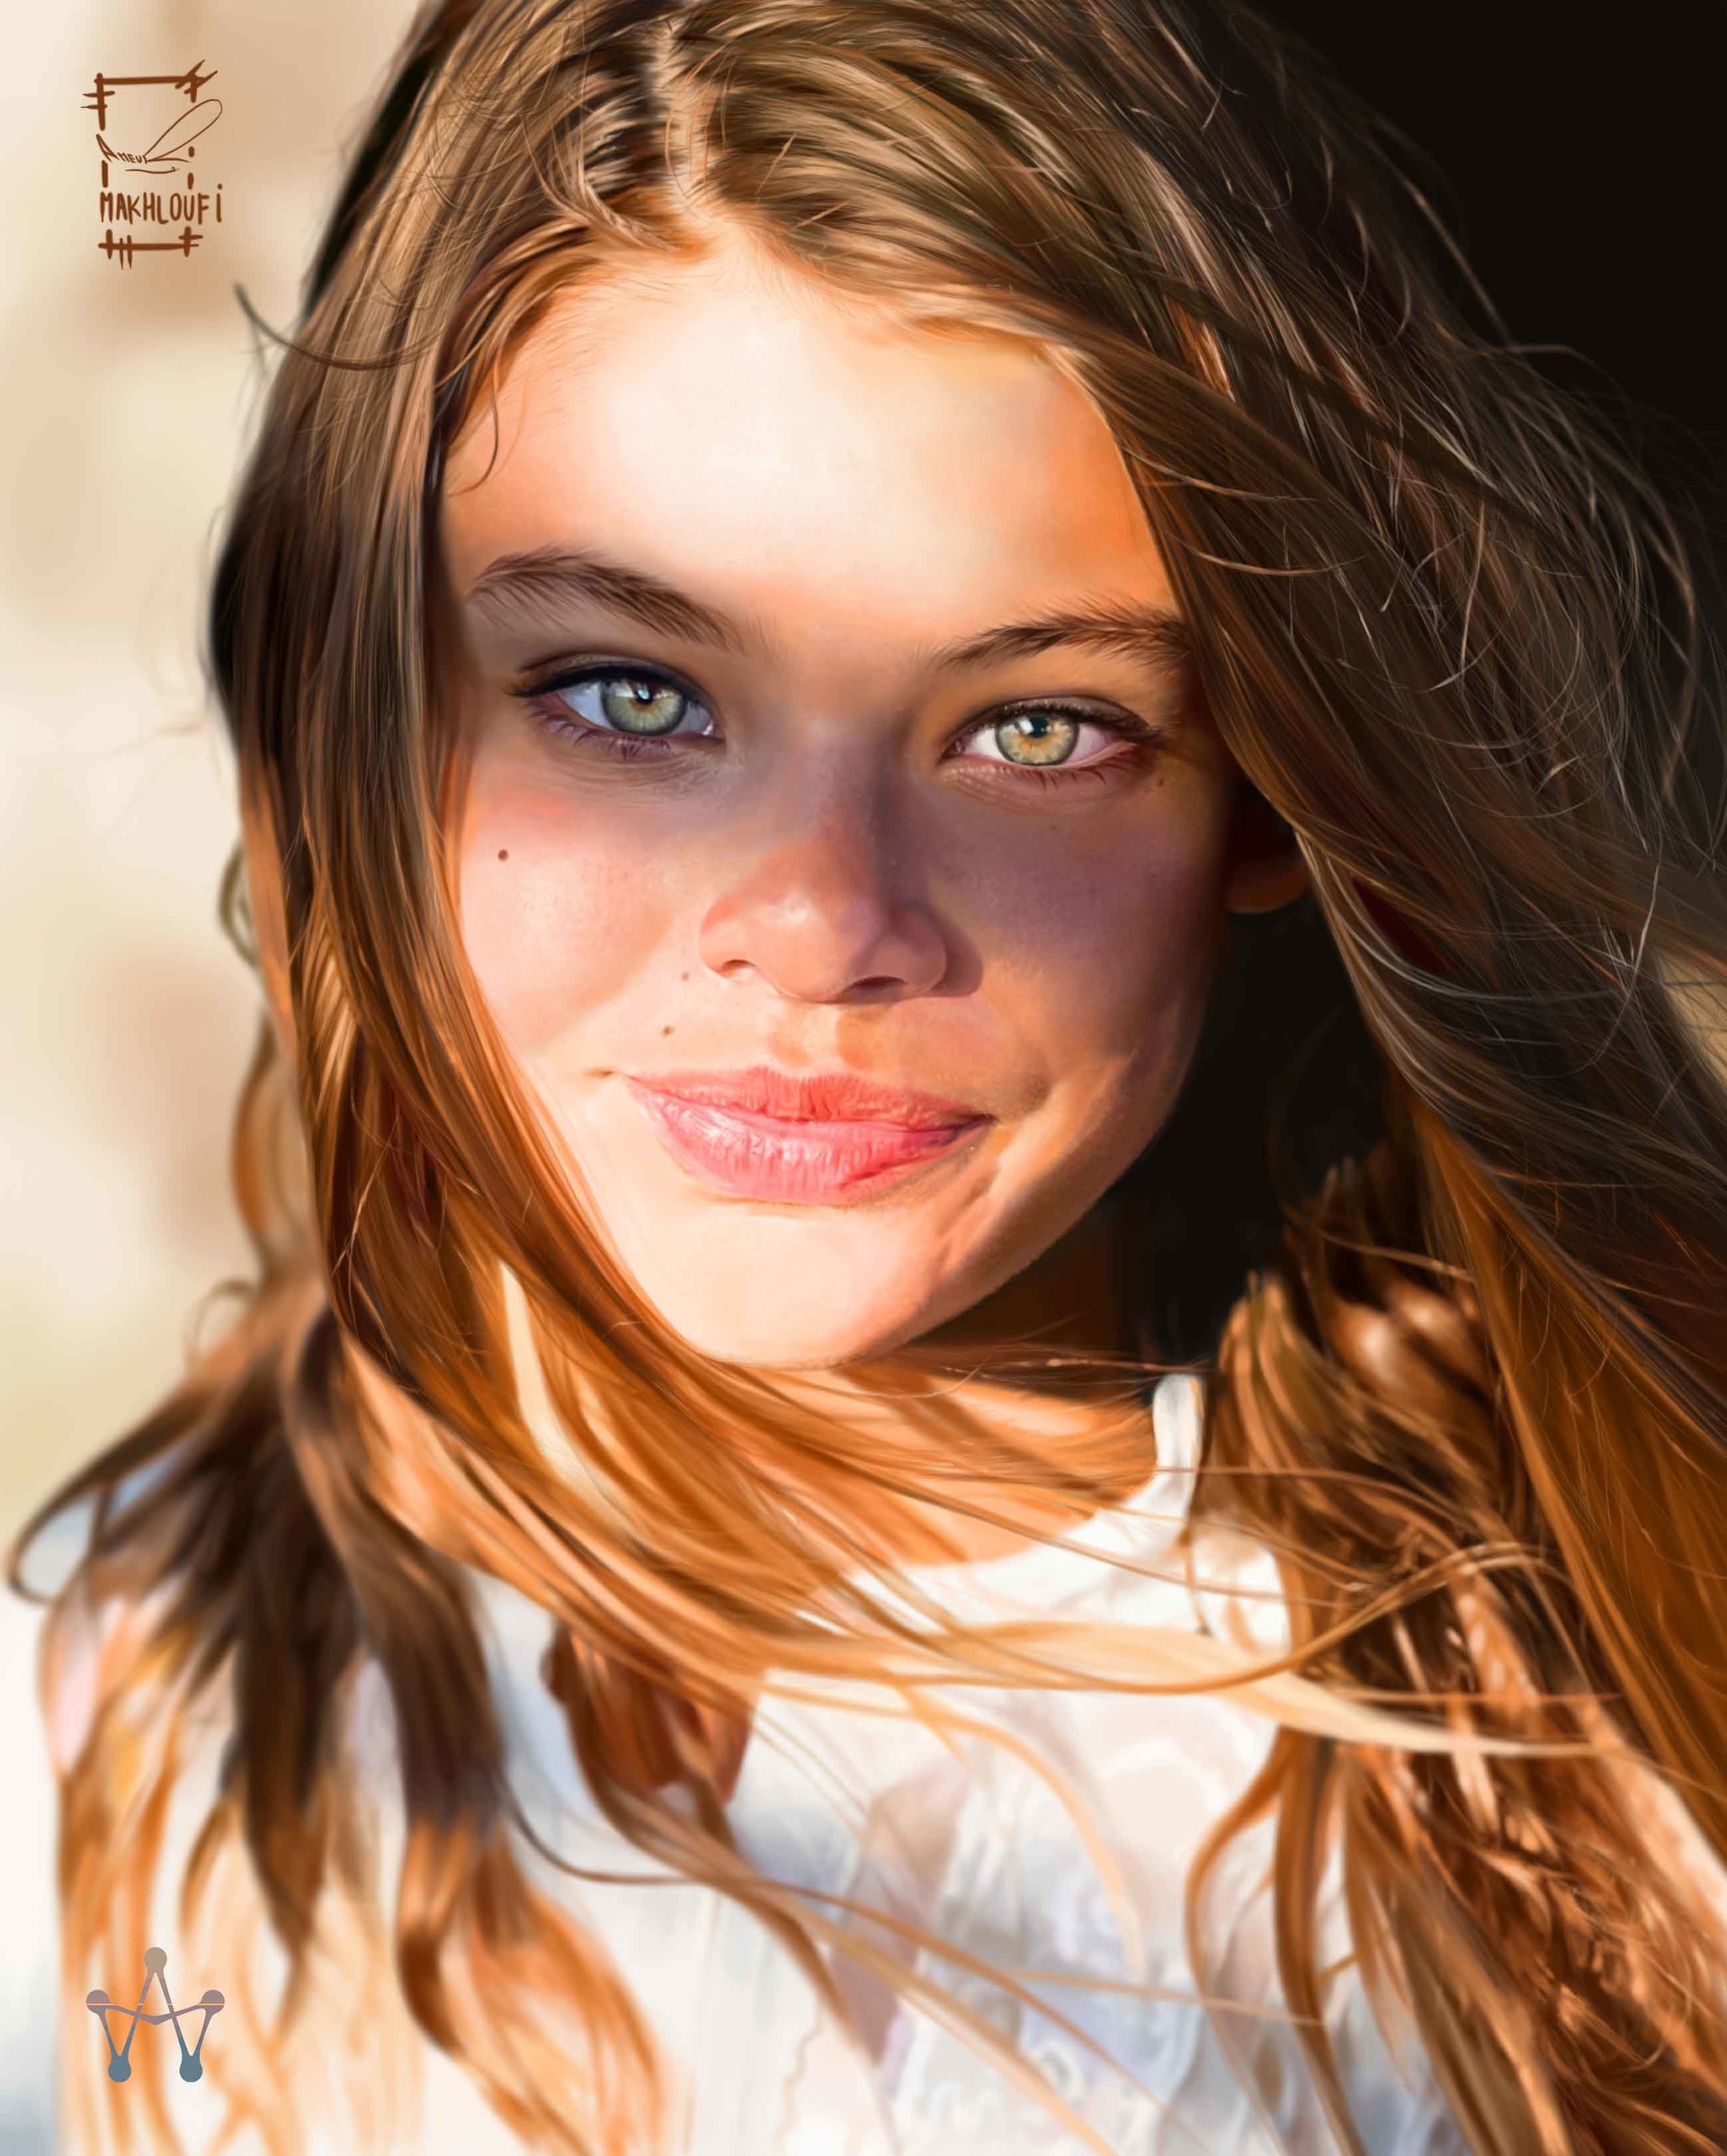 Digital Art Illustration Realistic Face Ameur Makhloufi Smiling Lips Lipstick Green Eyes Looking At  1920x2397